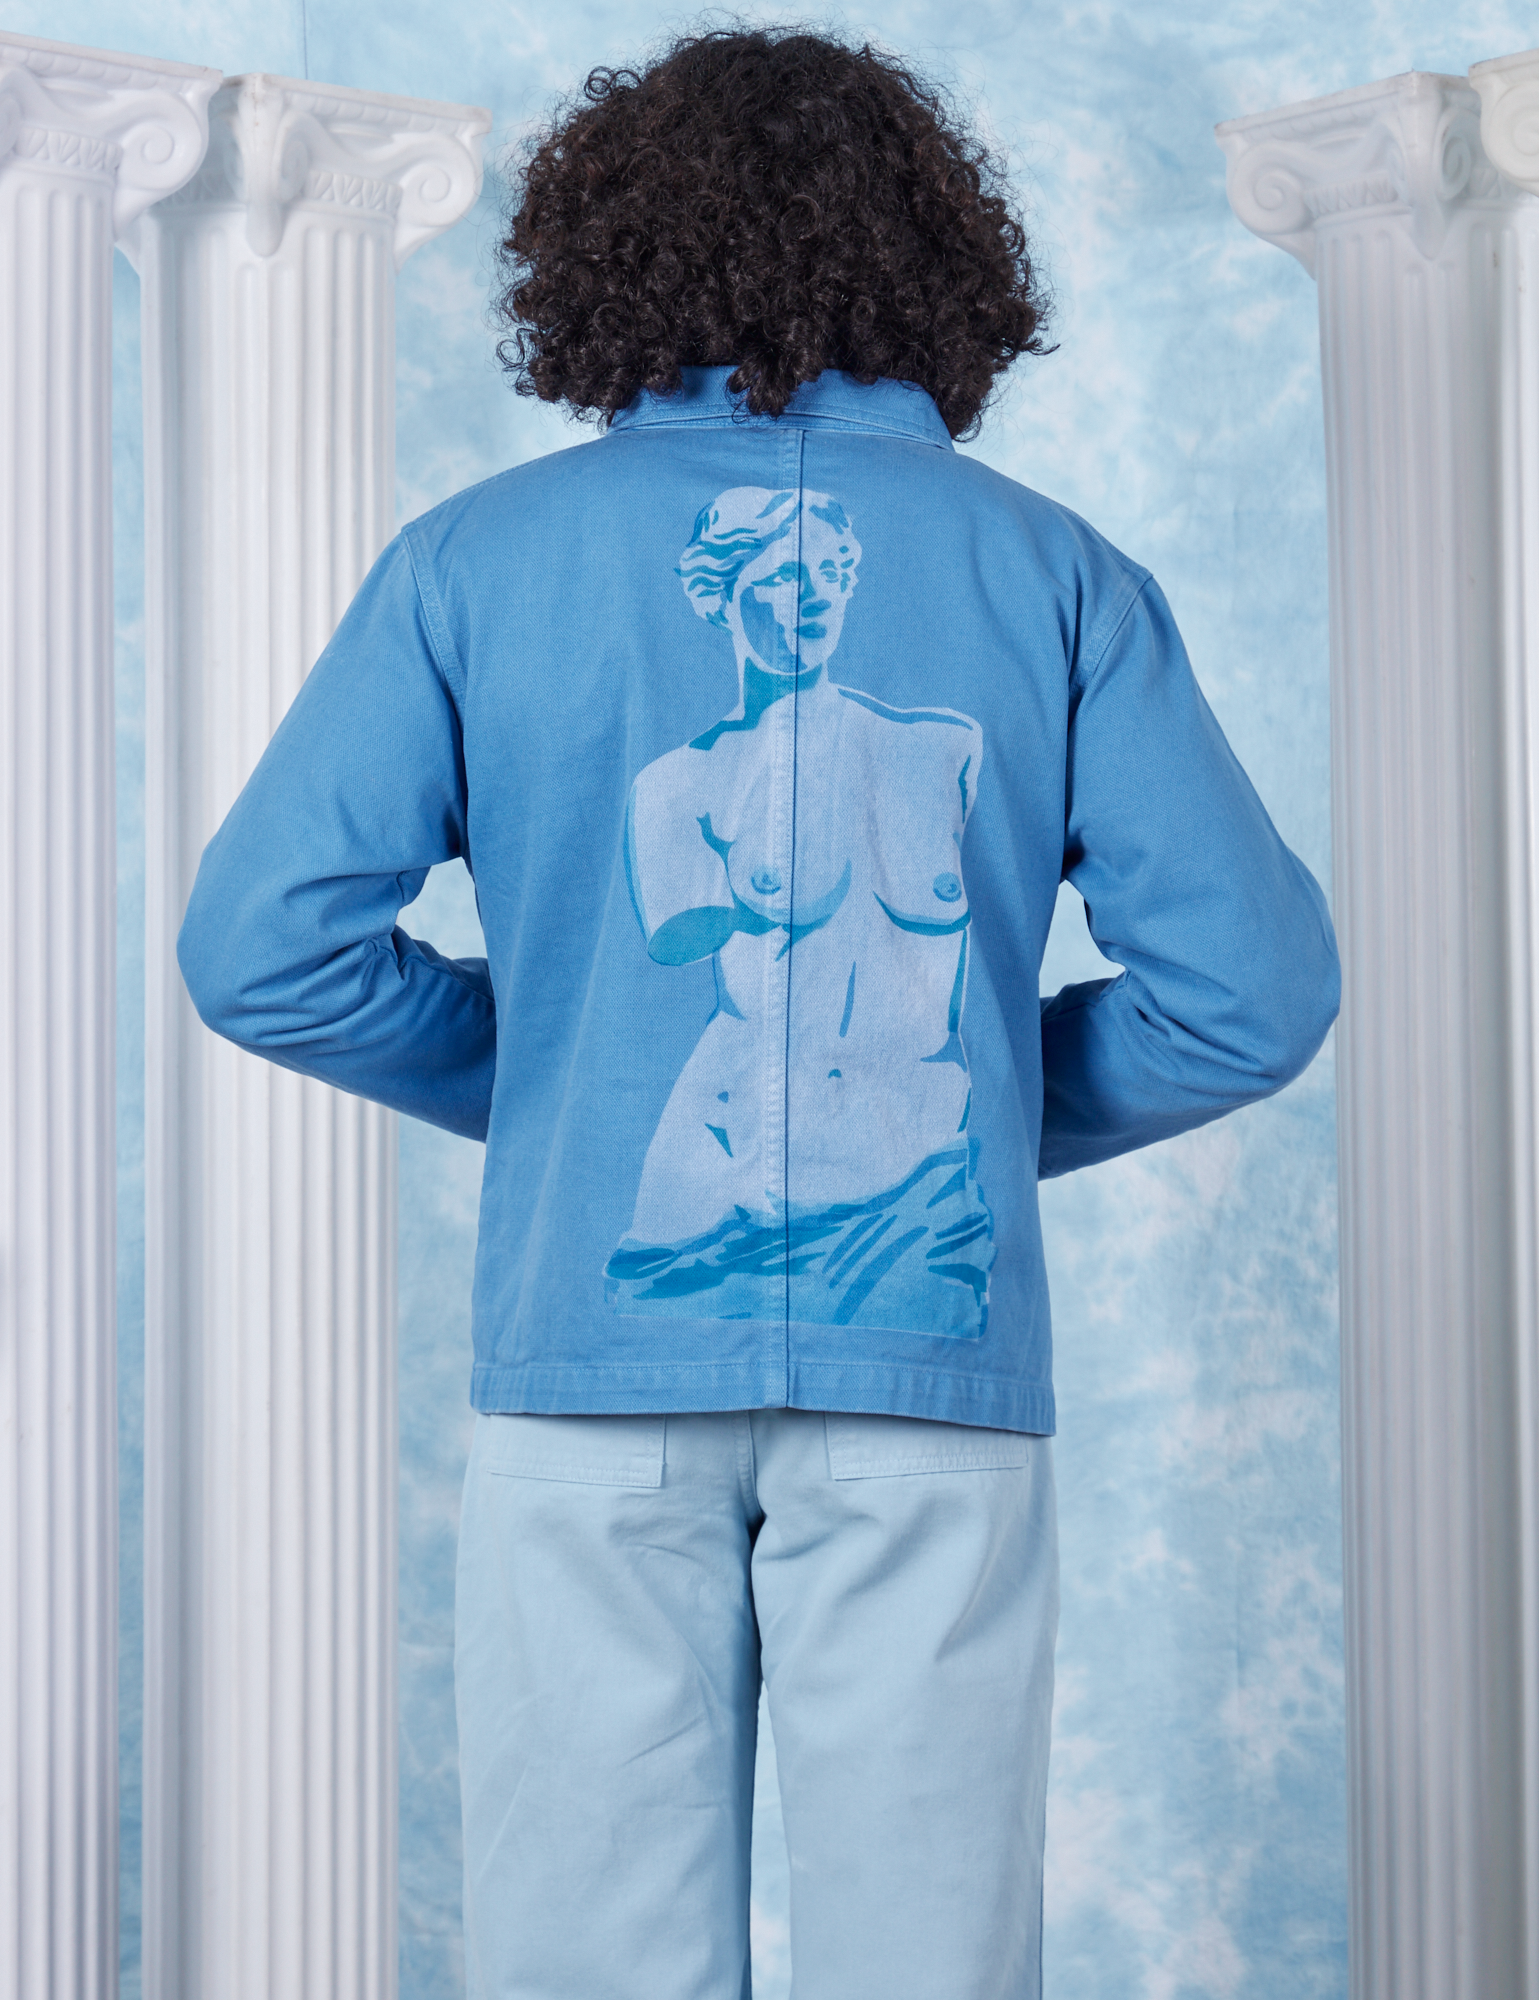 Neoclassical Work Jacket in Blue Venus back view on Jesse